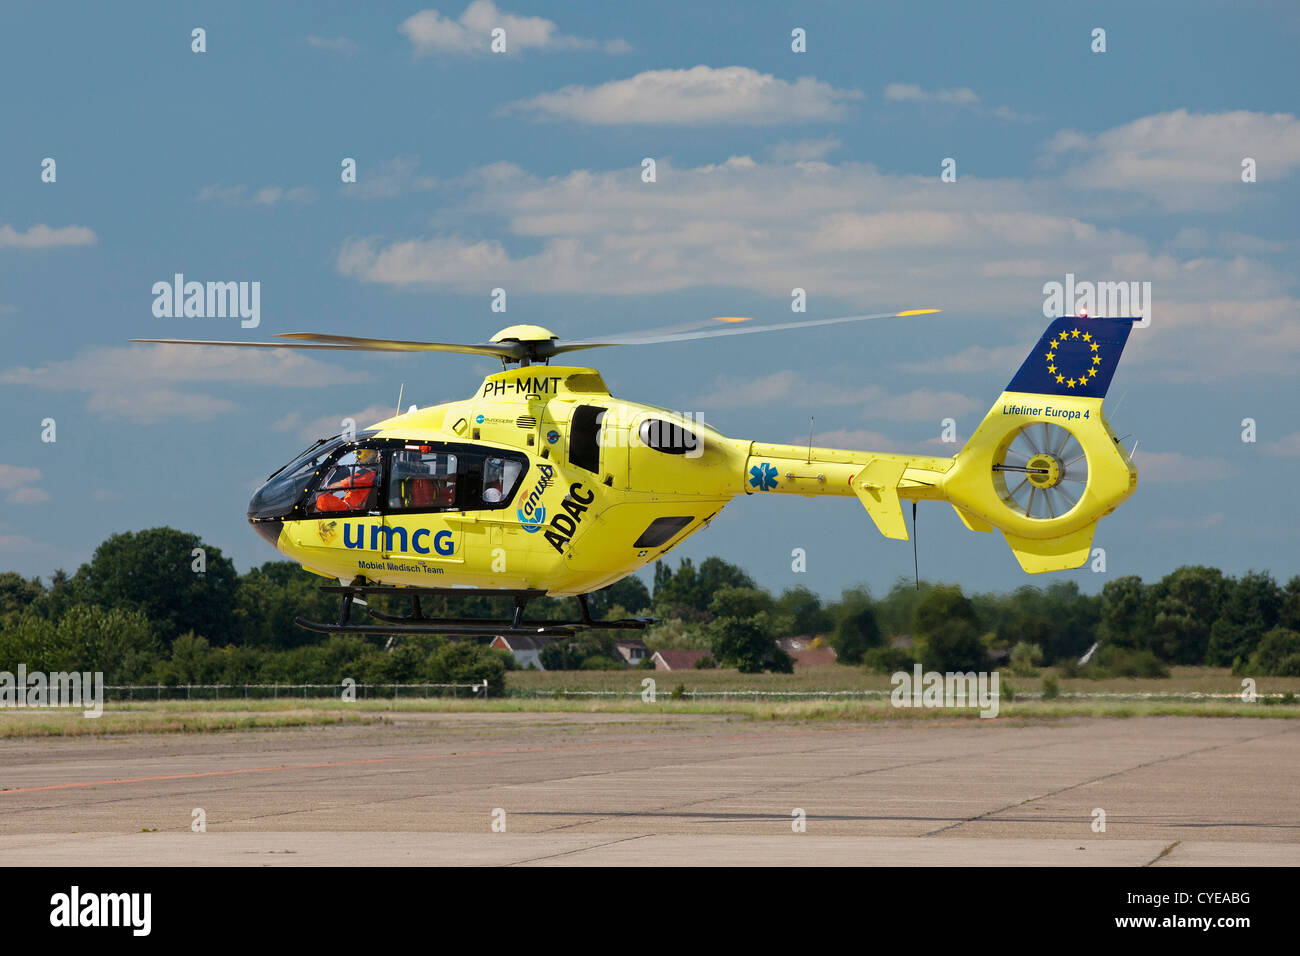 The Netherlands, Eelde, Groningen Airport. ANWB, UMCG, ADAG Emergency helicopter, Lifeliner Europa 4. Stock Photo